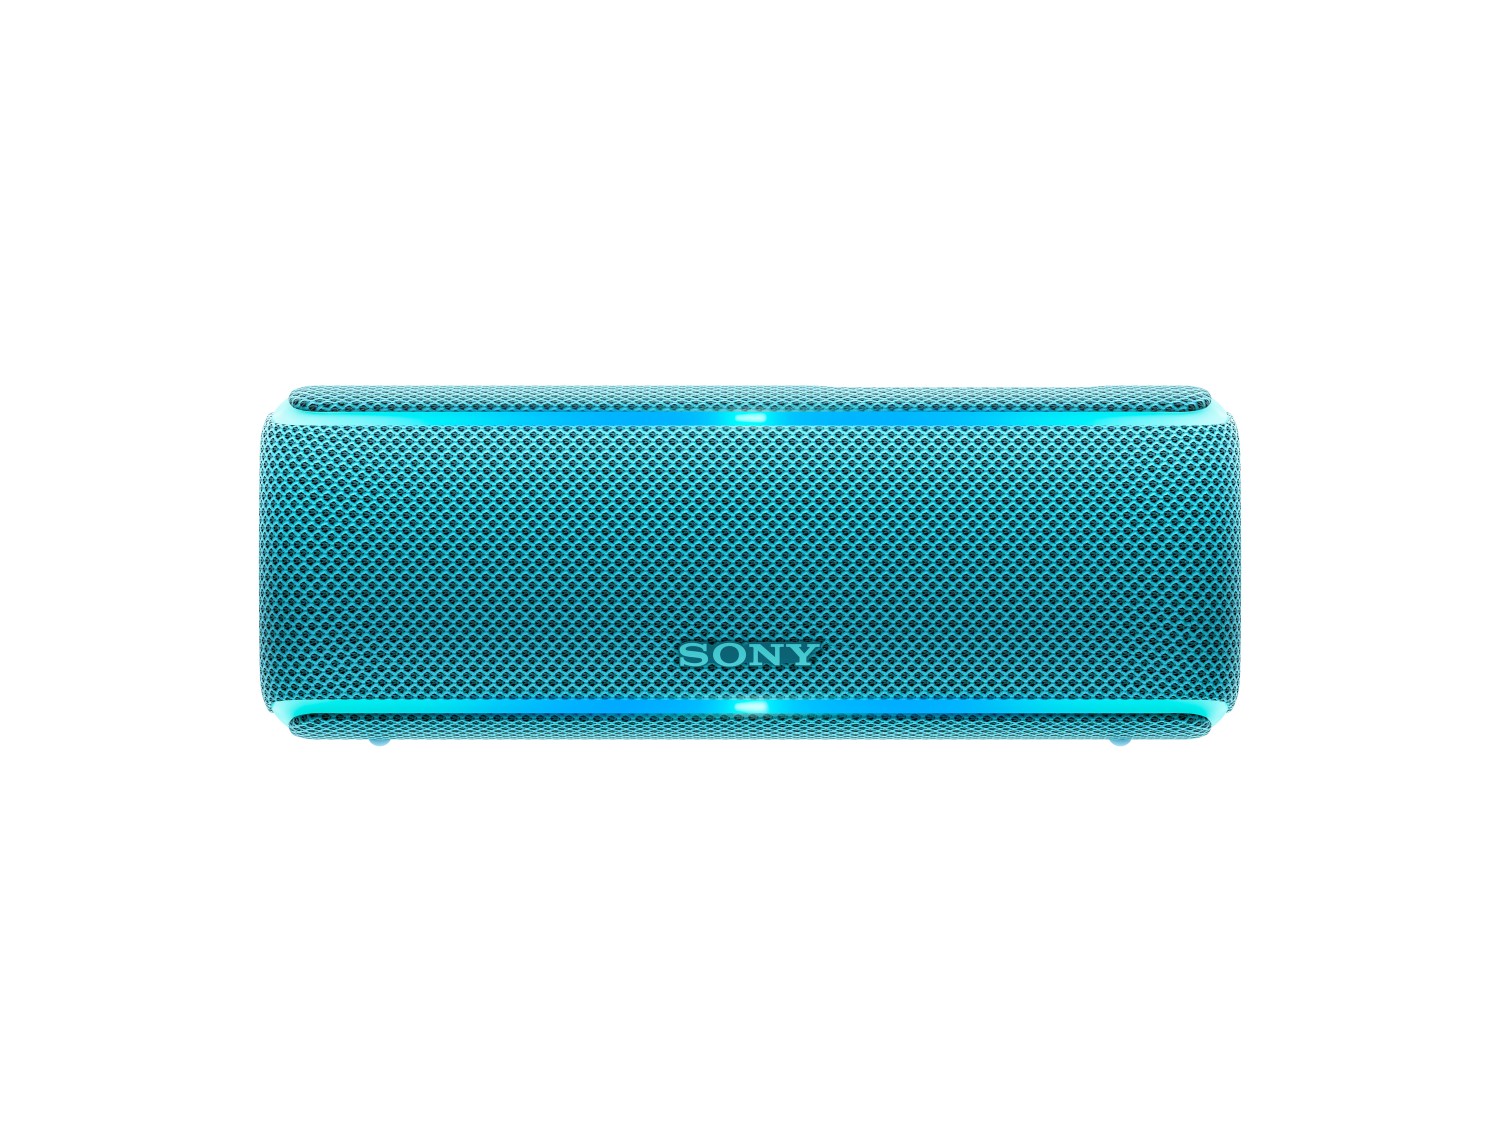 Sony SRS-XB21 Super Bass Portable Party Speaker Blue